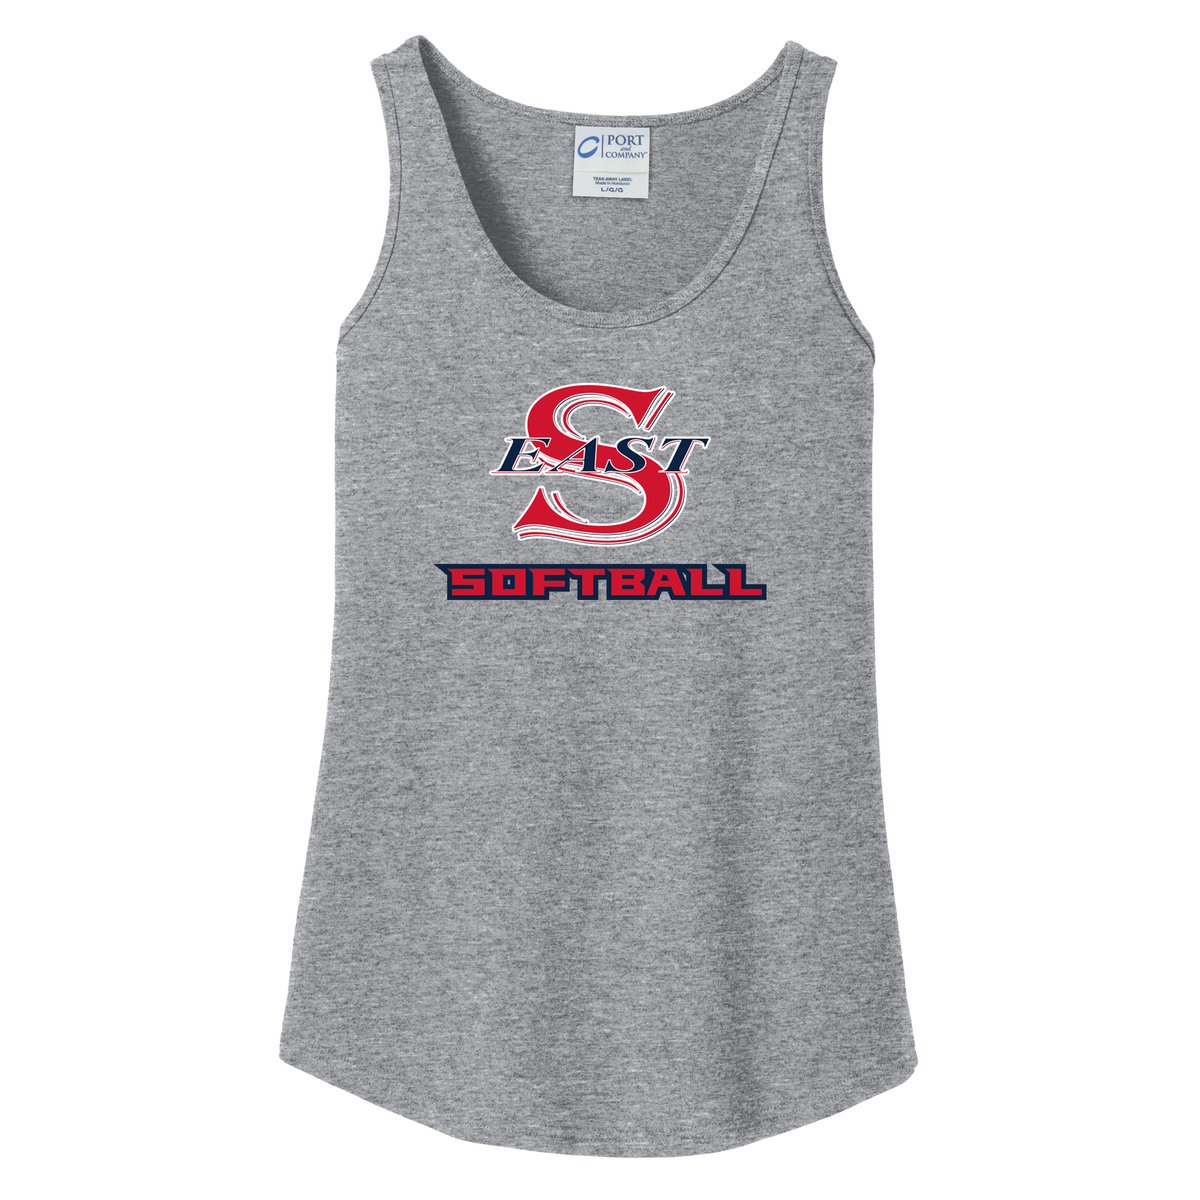 Smithtown East Softball Women's Tank Top